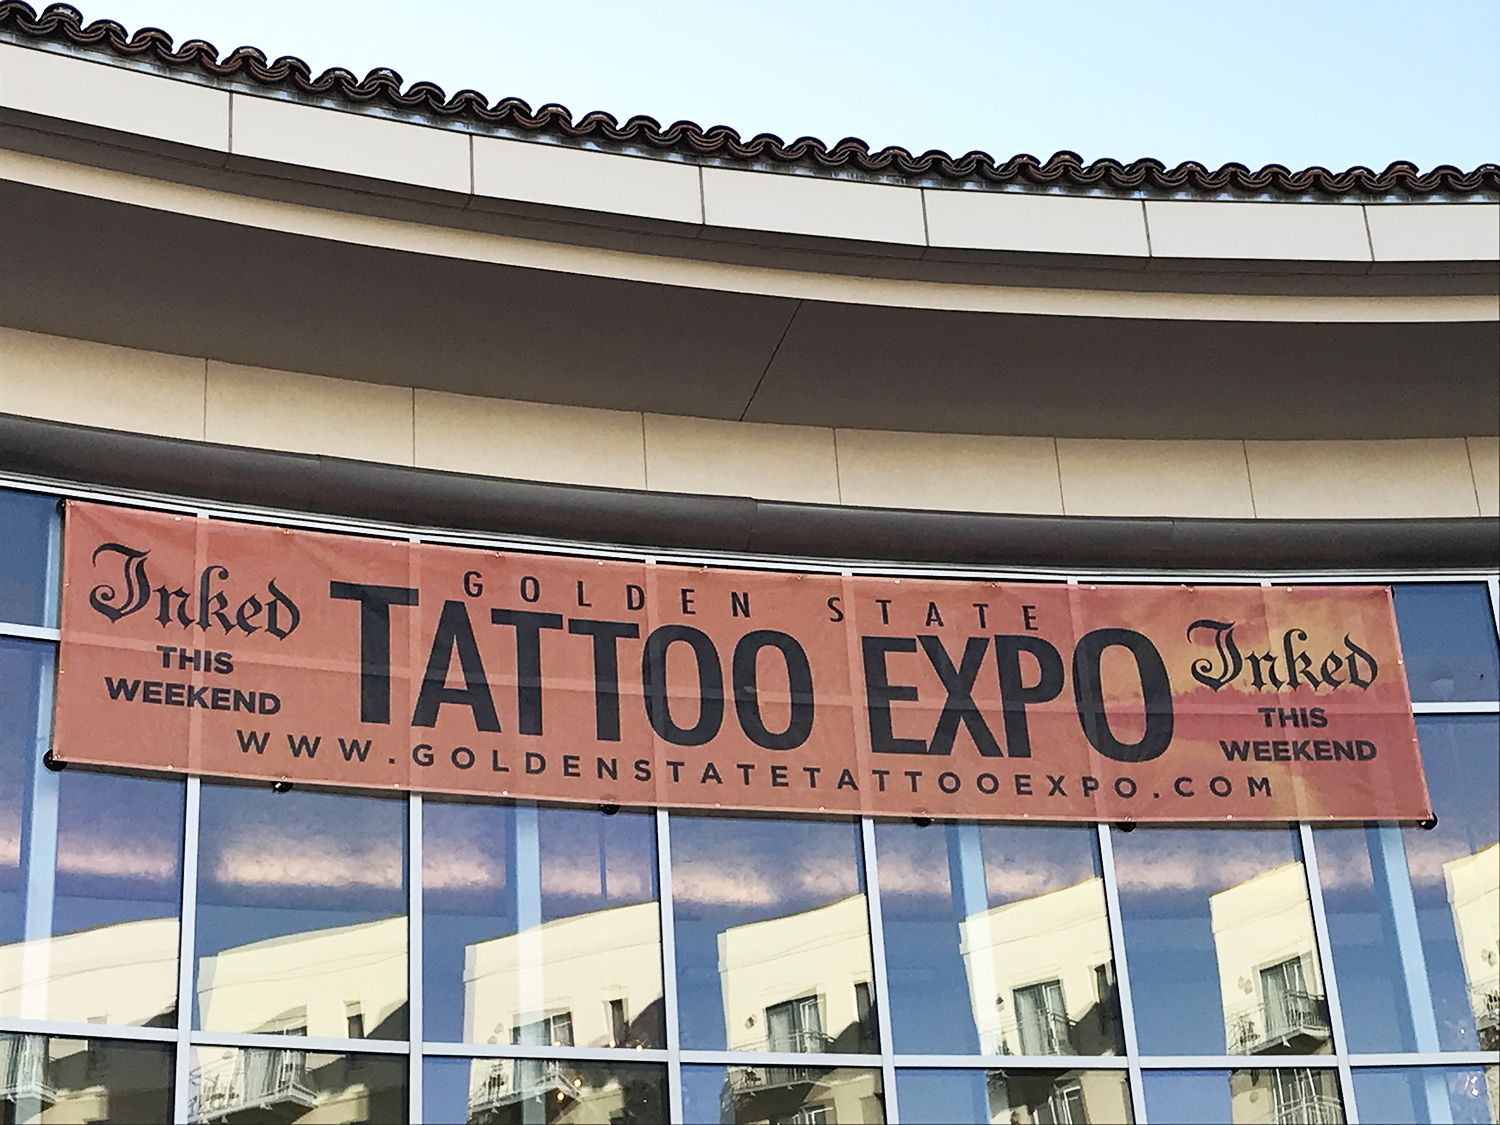 Golden State Tattoo Expo building in Pasadena, LA , California